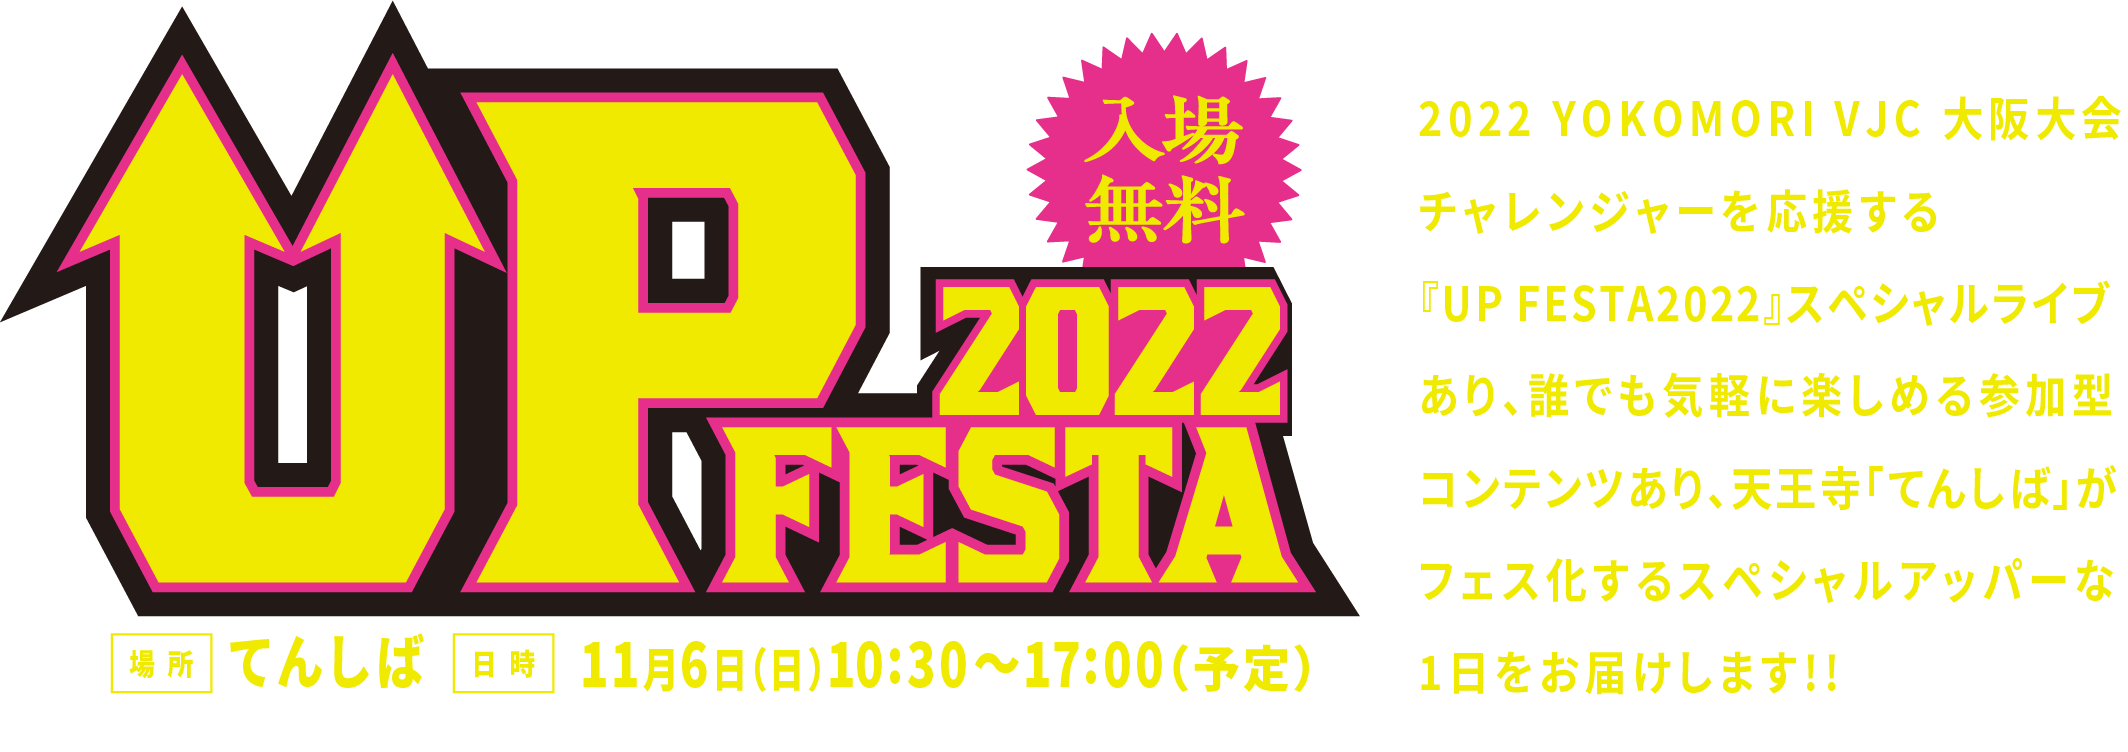 UP FESTA 2022 入場無料 10:30〜17:00（予定）